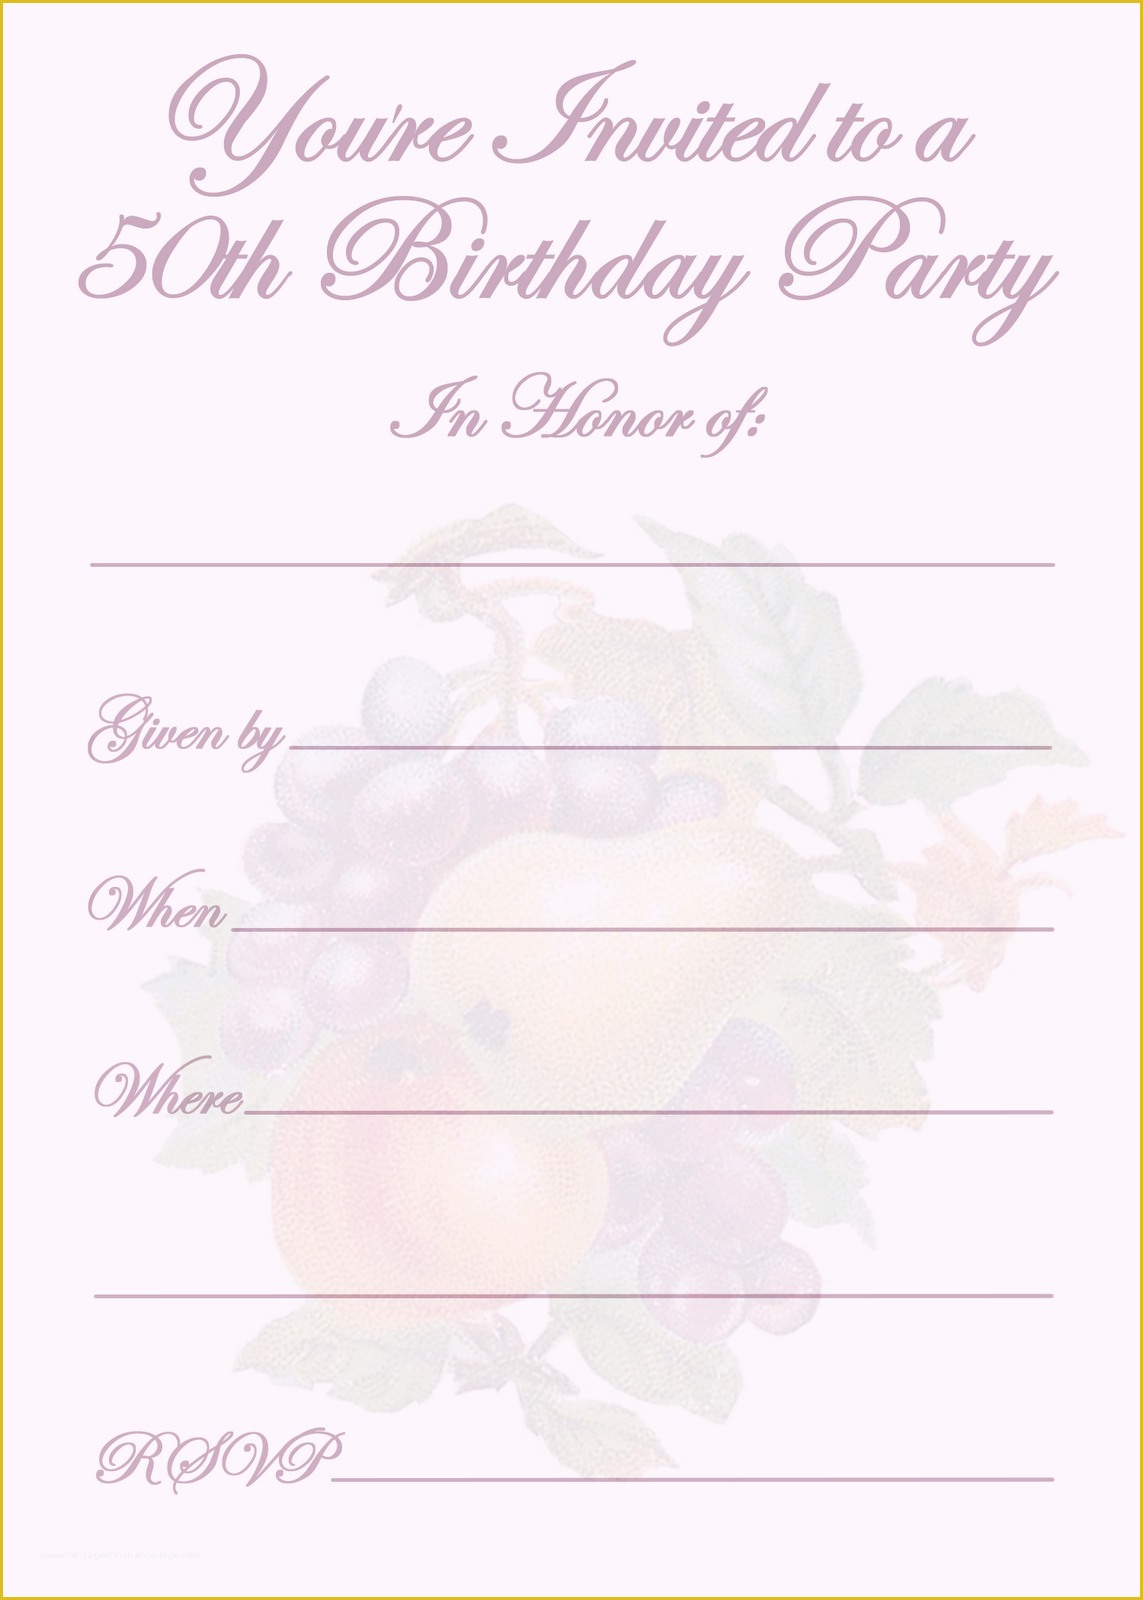 Free Online 50th Birthday Invitation Templates Of Free Printable 50th Birthday Party Invitation Templates